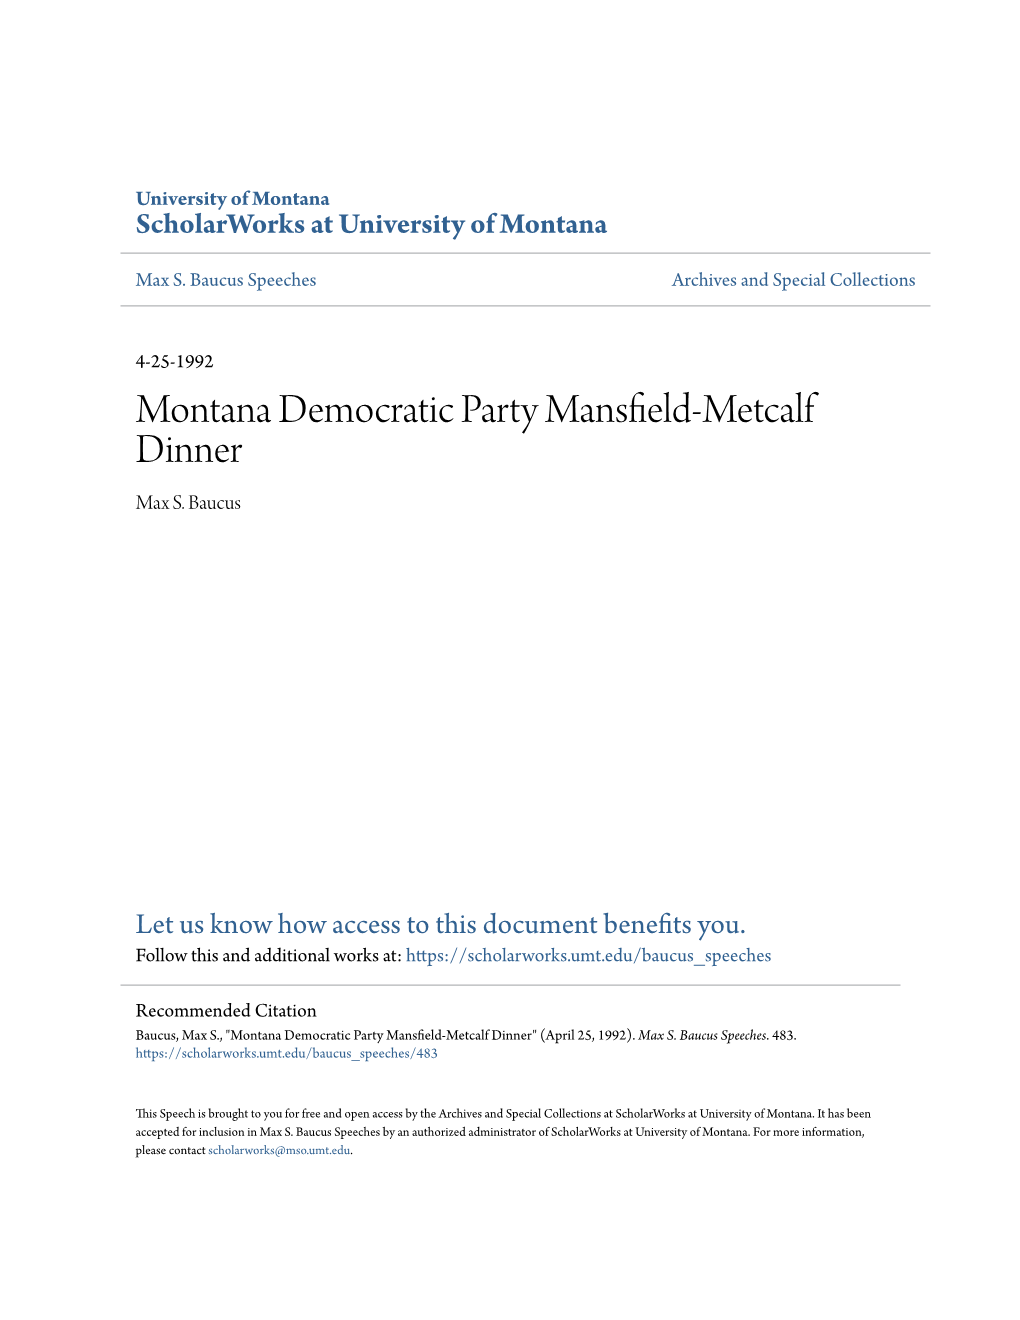 Montana Democratic Party Mansfield-Metcalf Dinner Max S